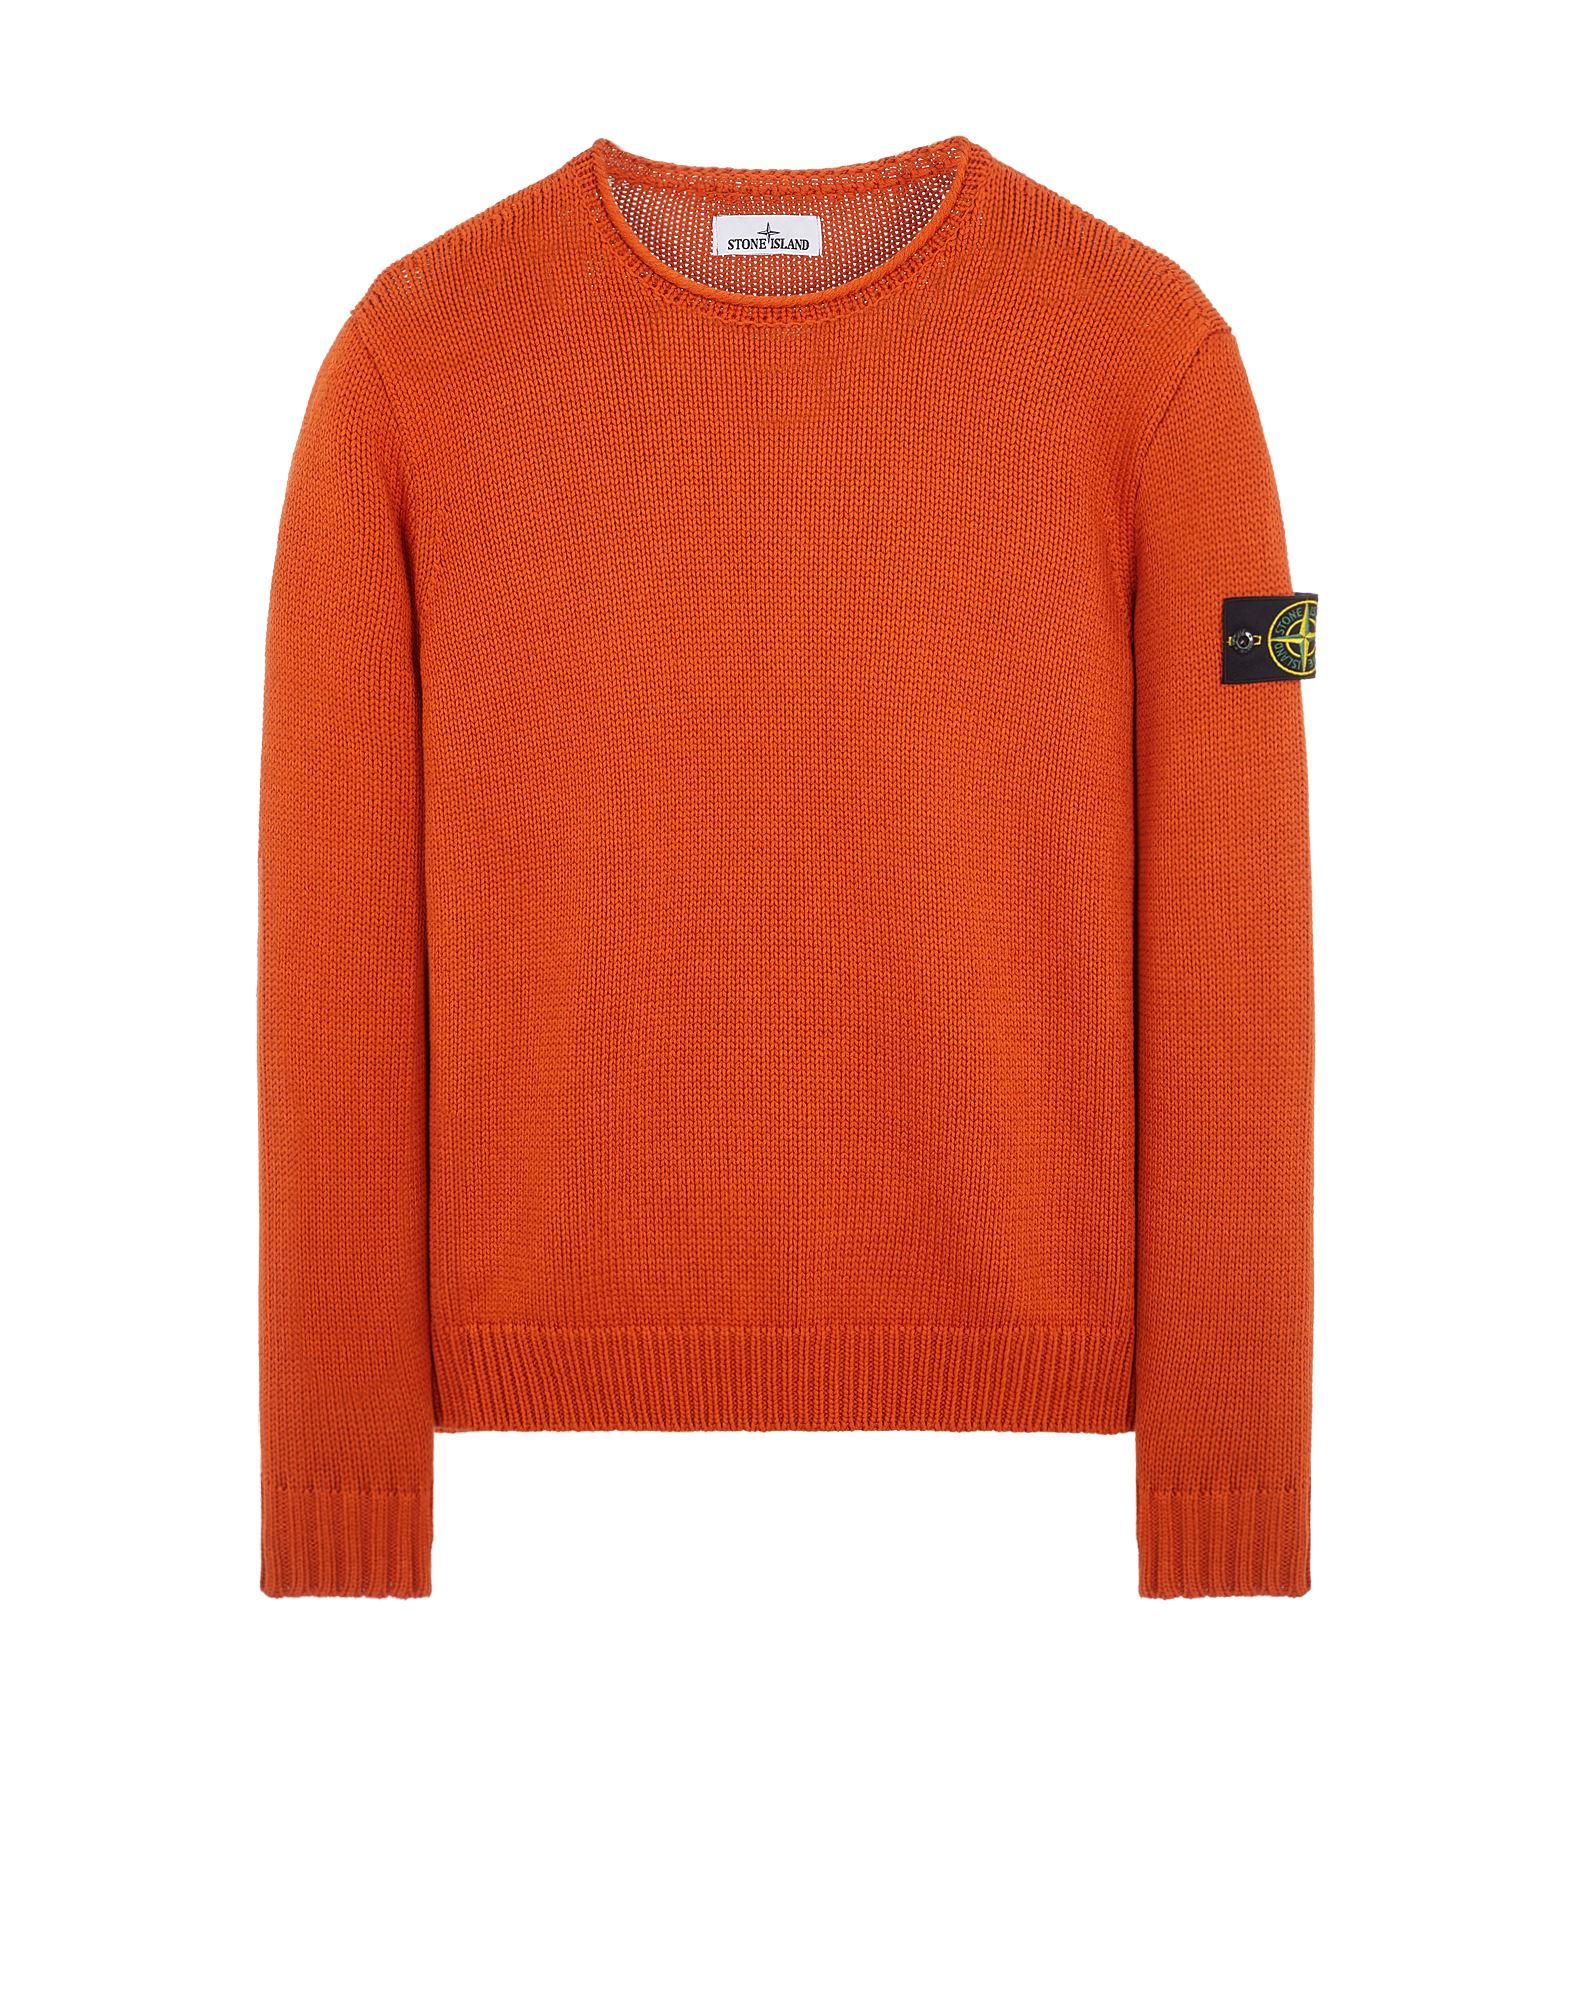 Stone Island Sweater Cotton in Orange for Men | Lyst